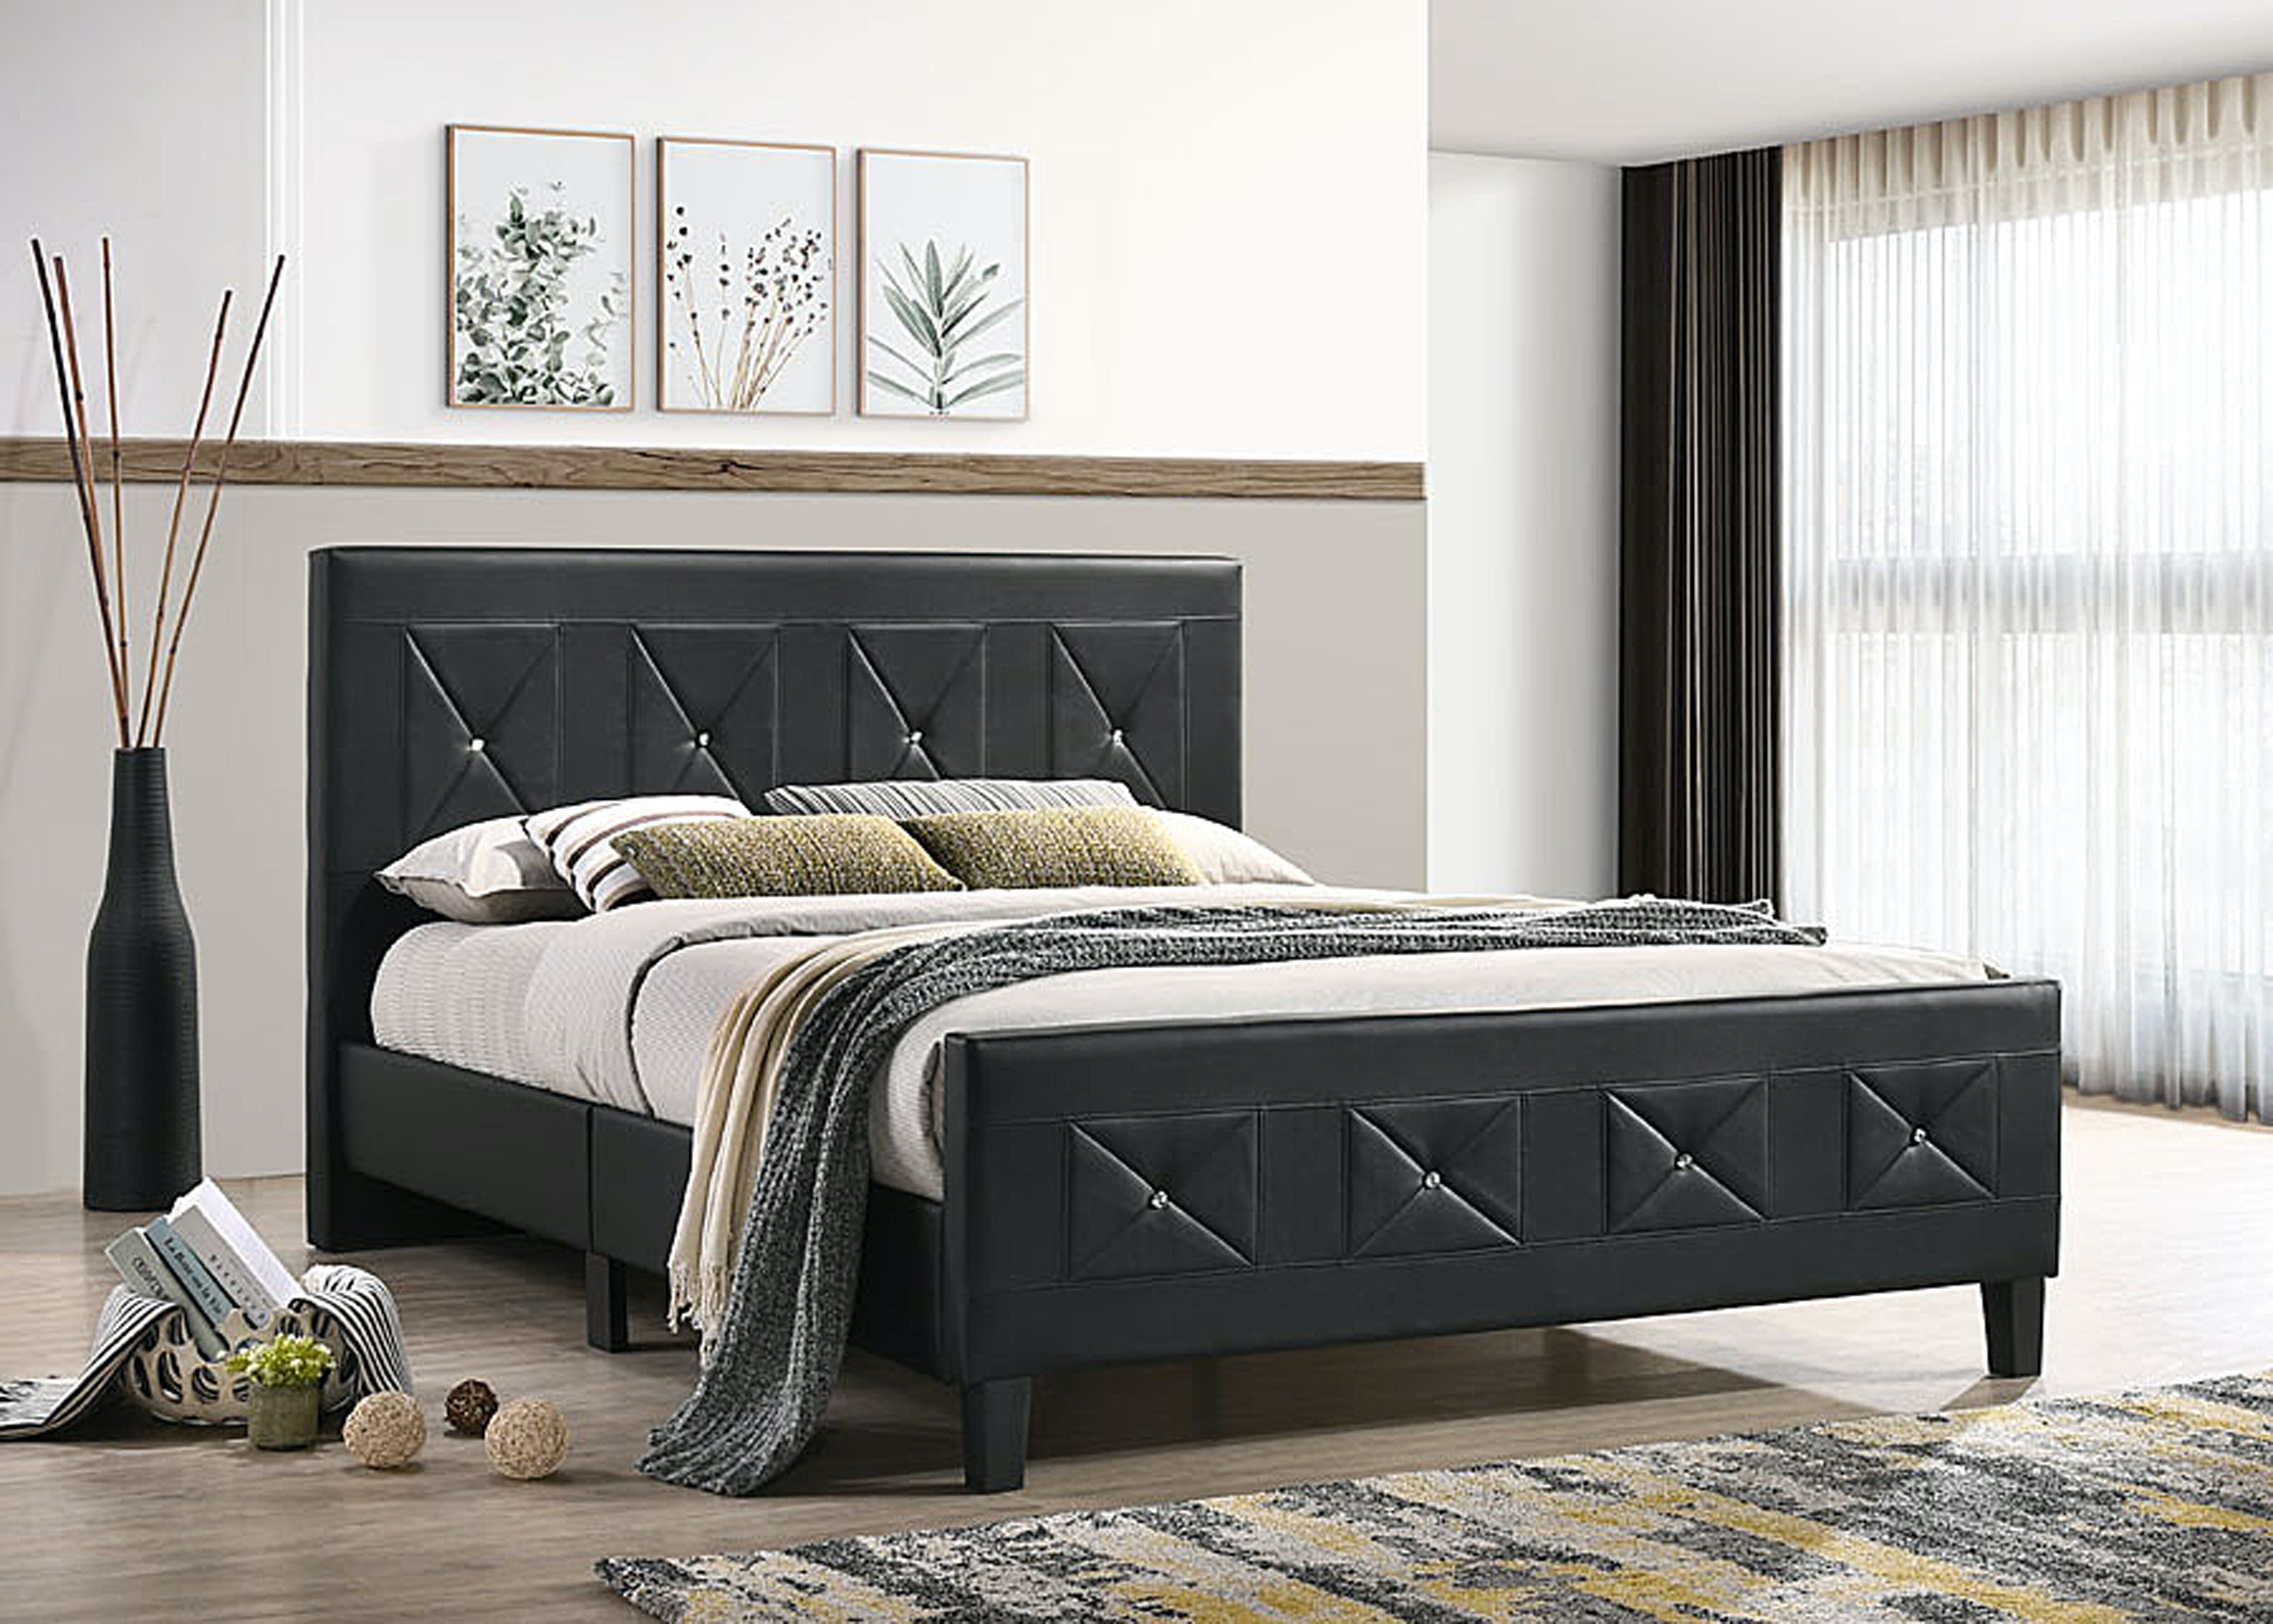 Aerys Queen Size Upholstered Platform Bed, Queen Bed Frame | Walmart Canada